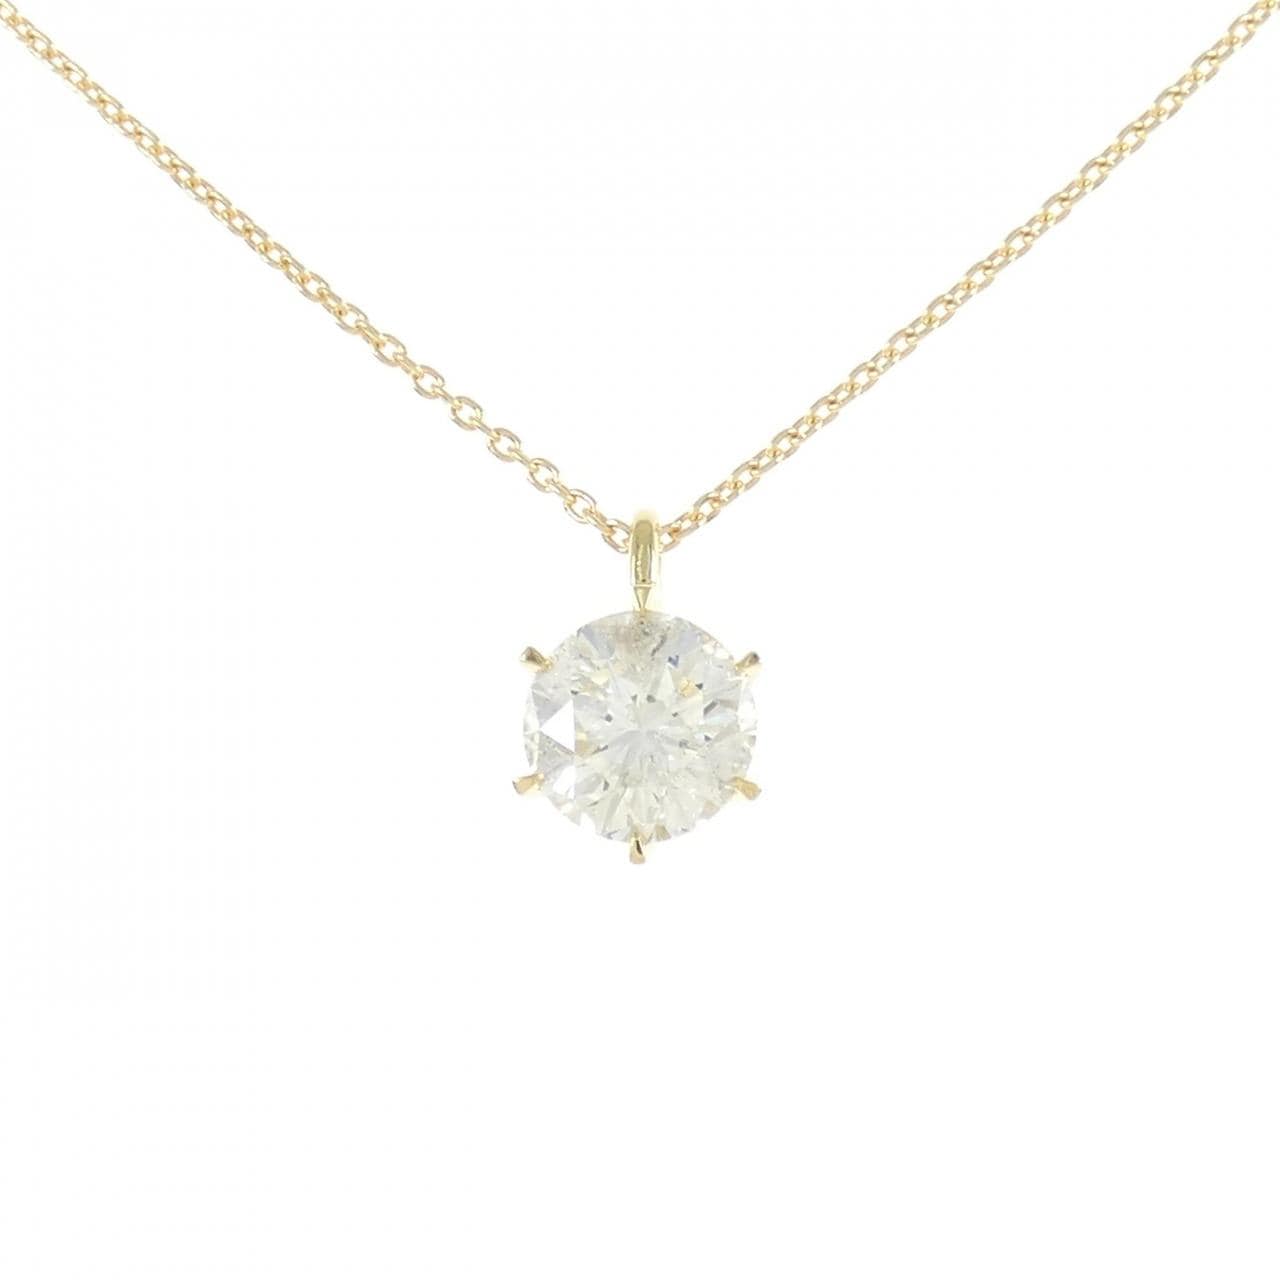 [Remake] K18YG Diamond Necklace 2.188CT K I1 Good